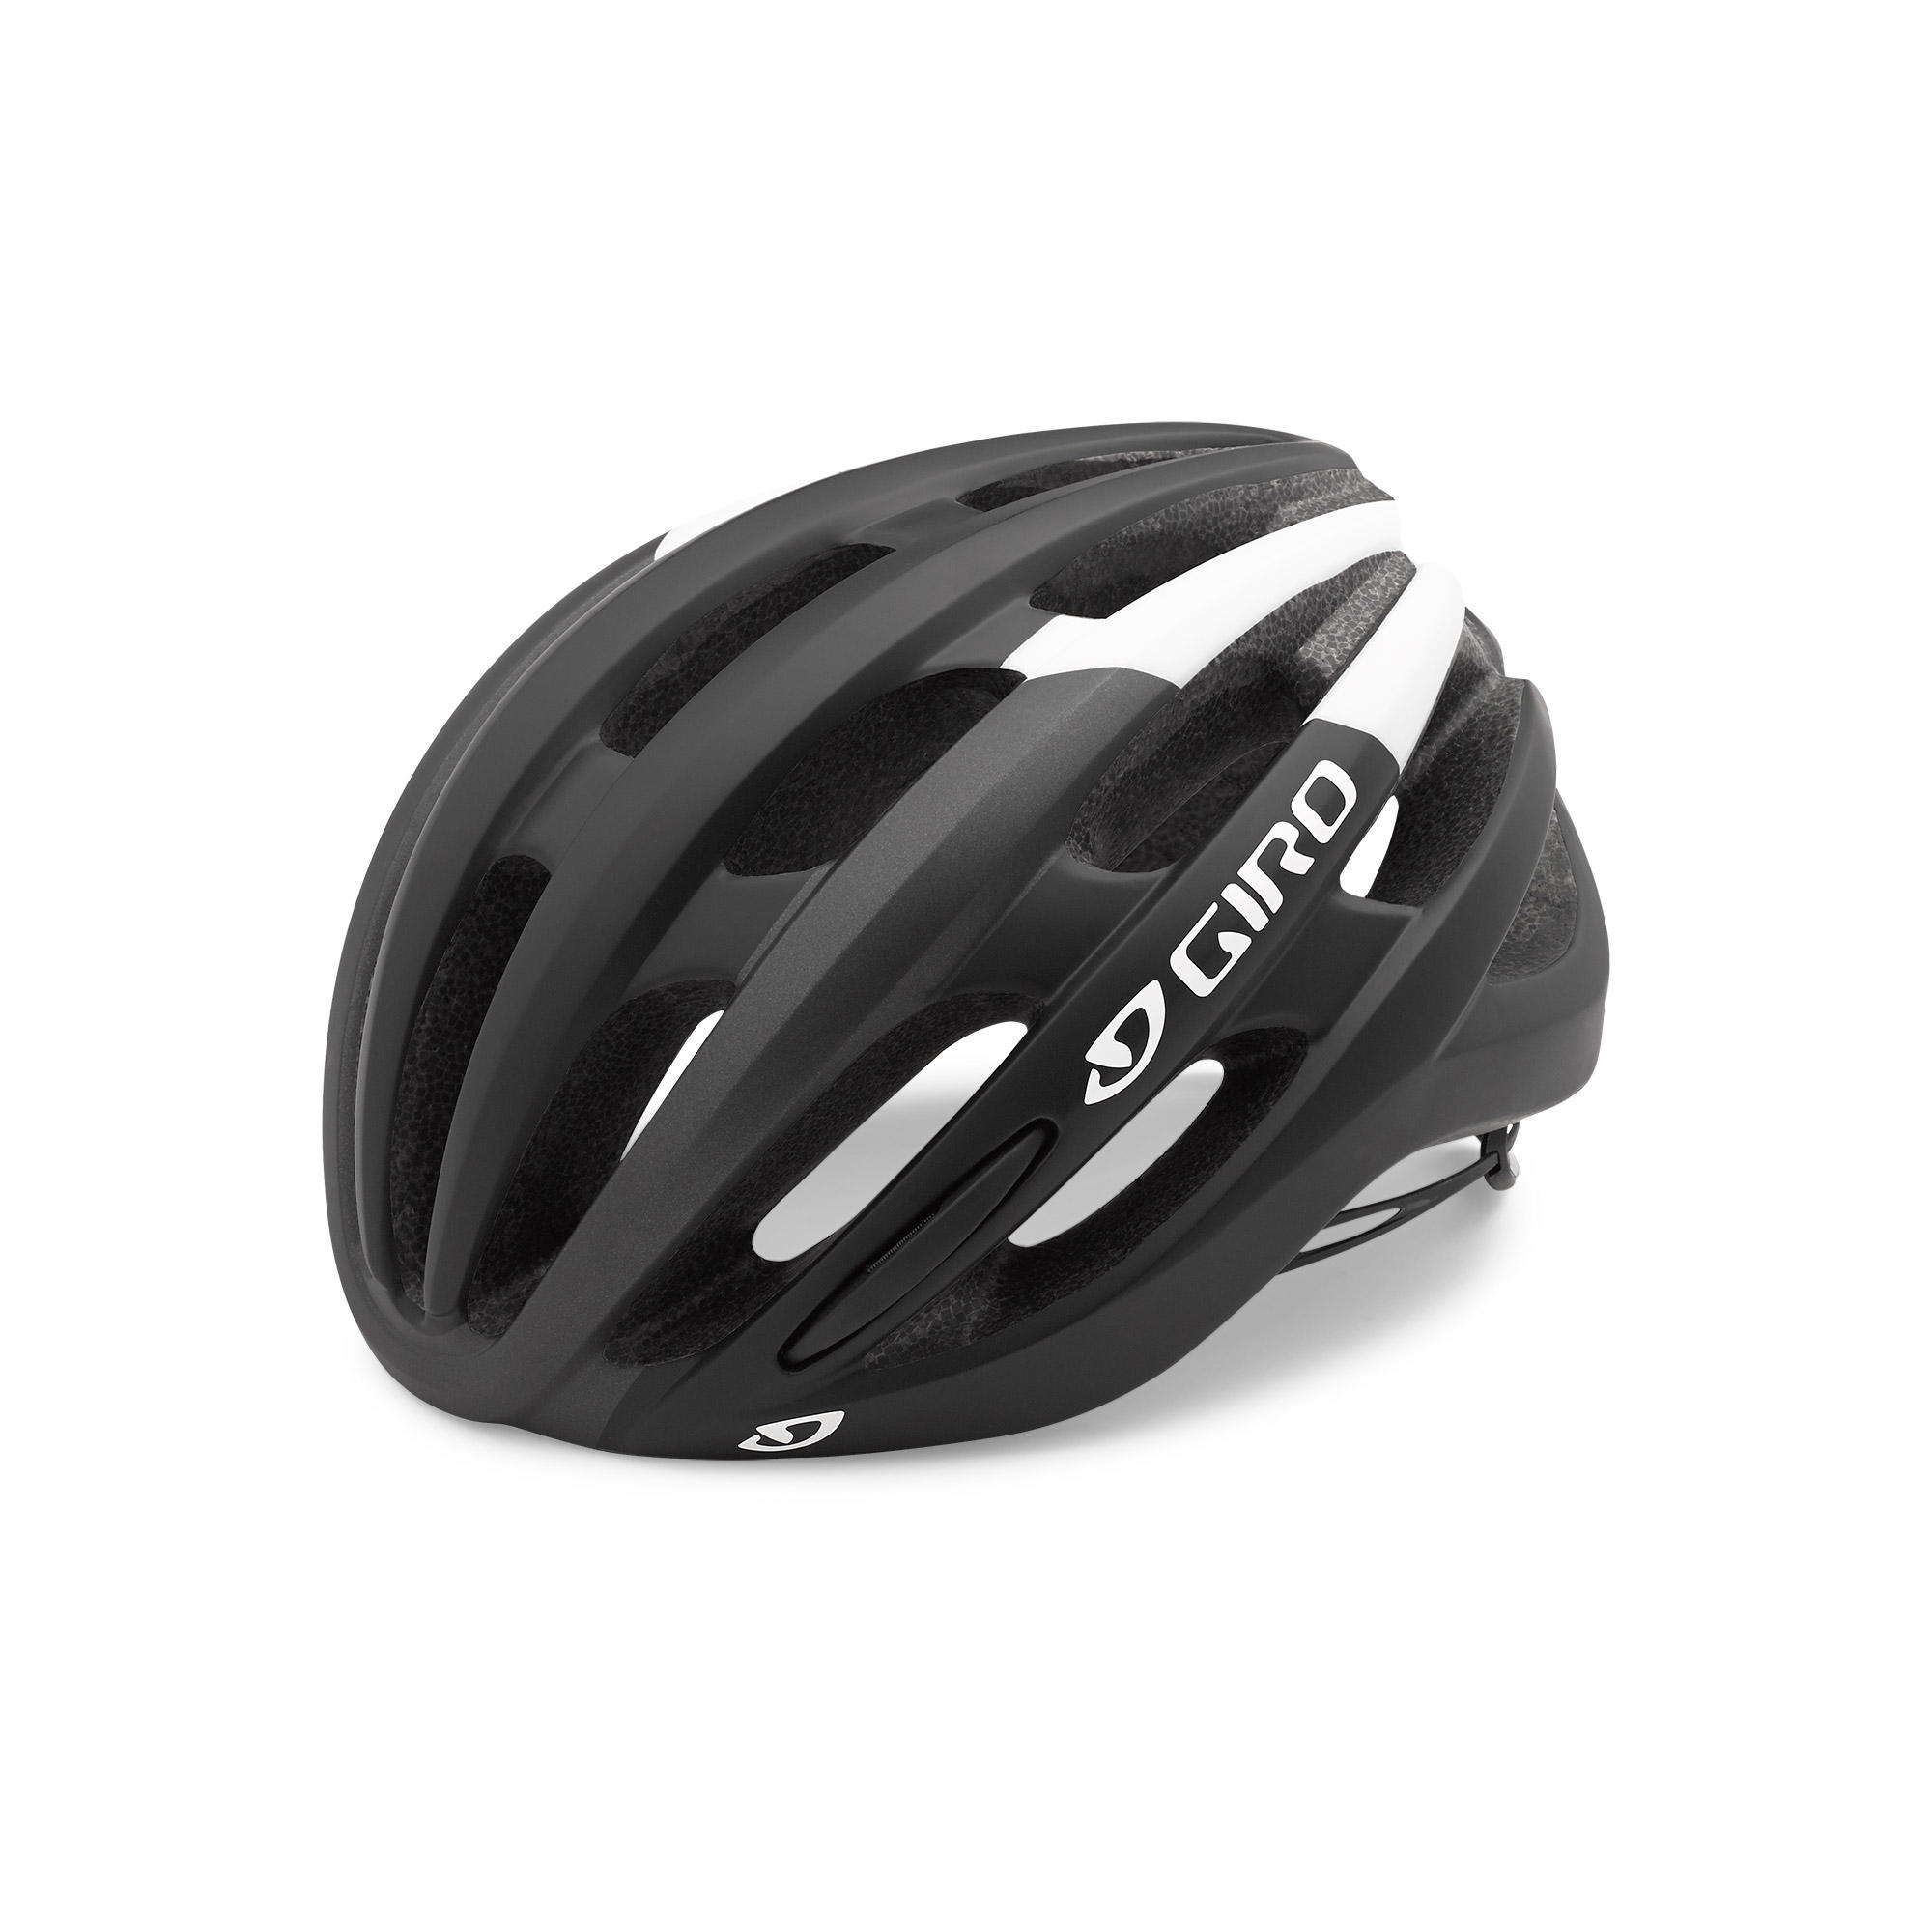 black and white bike helmet